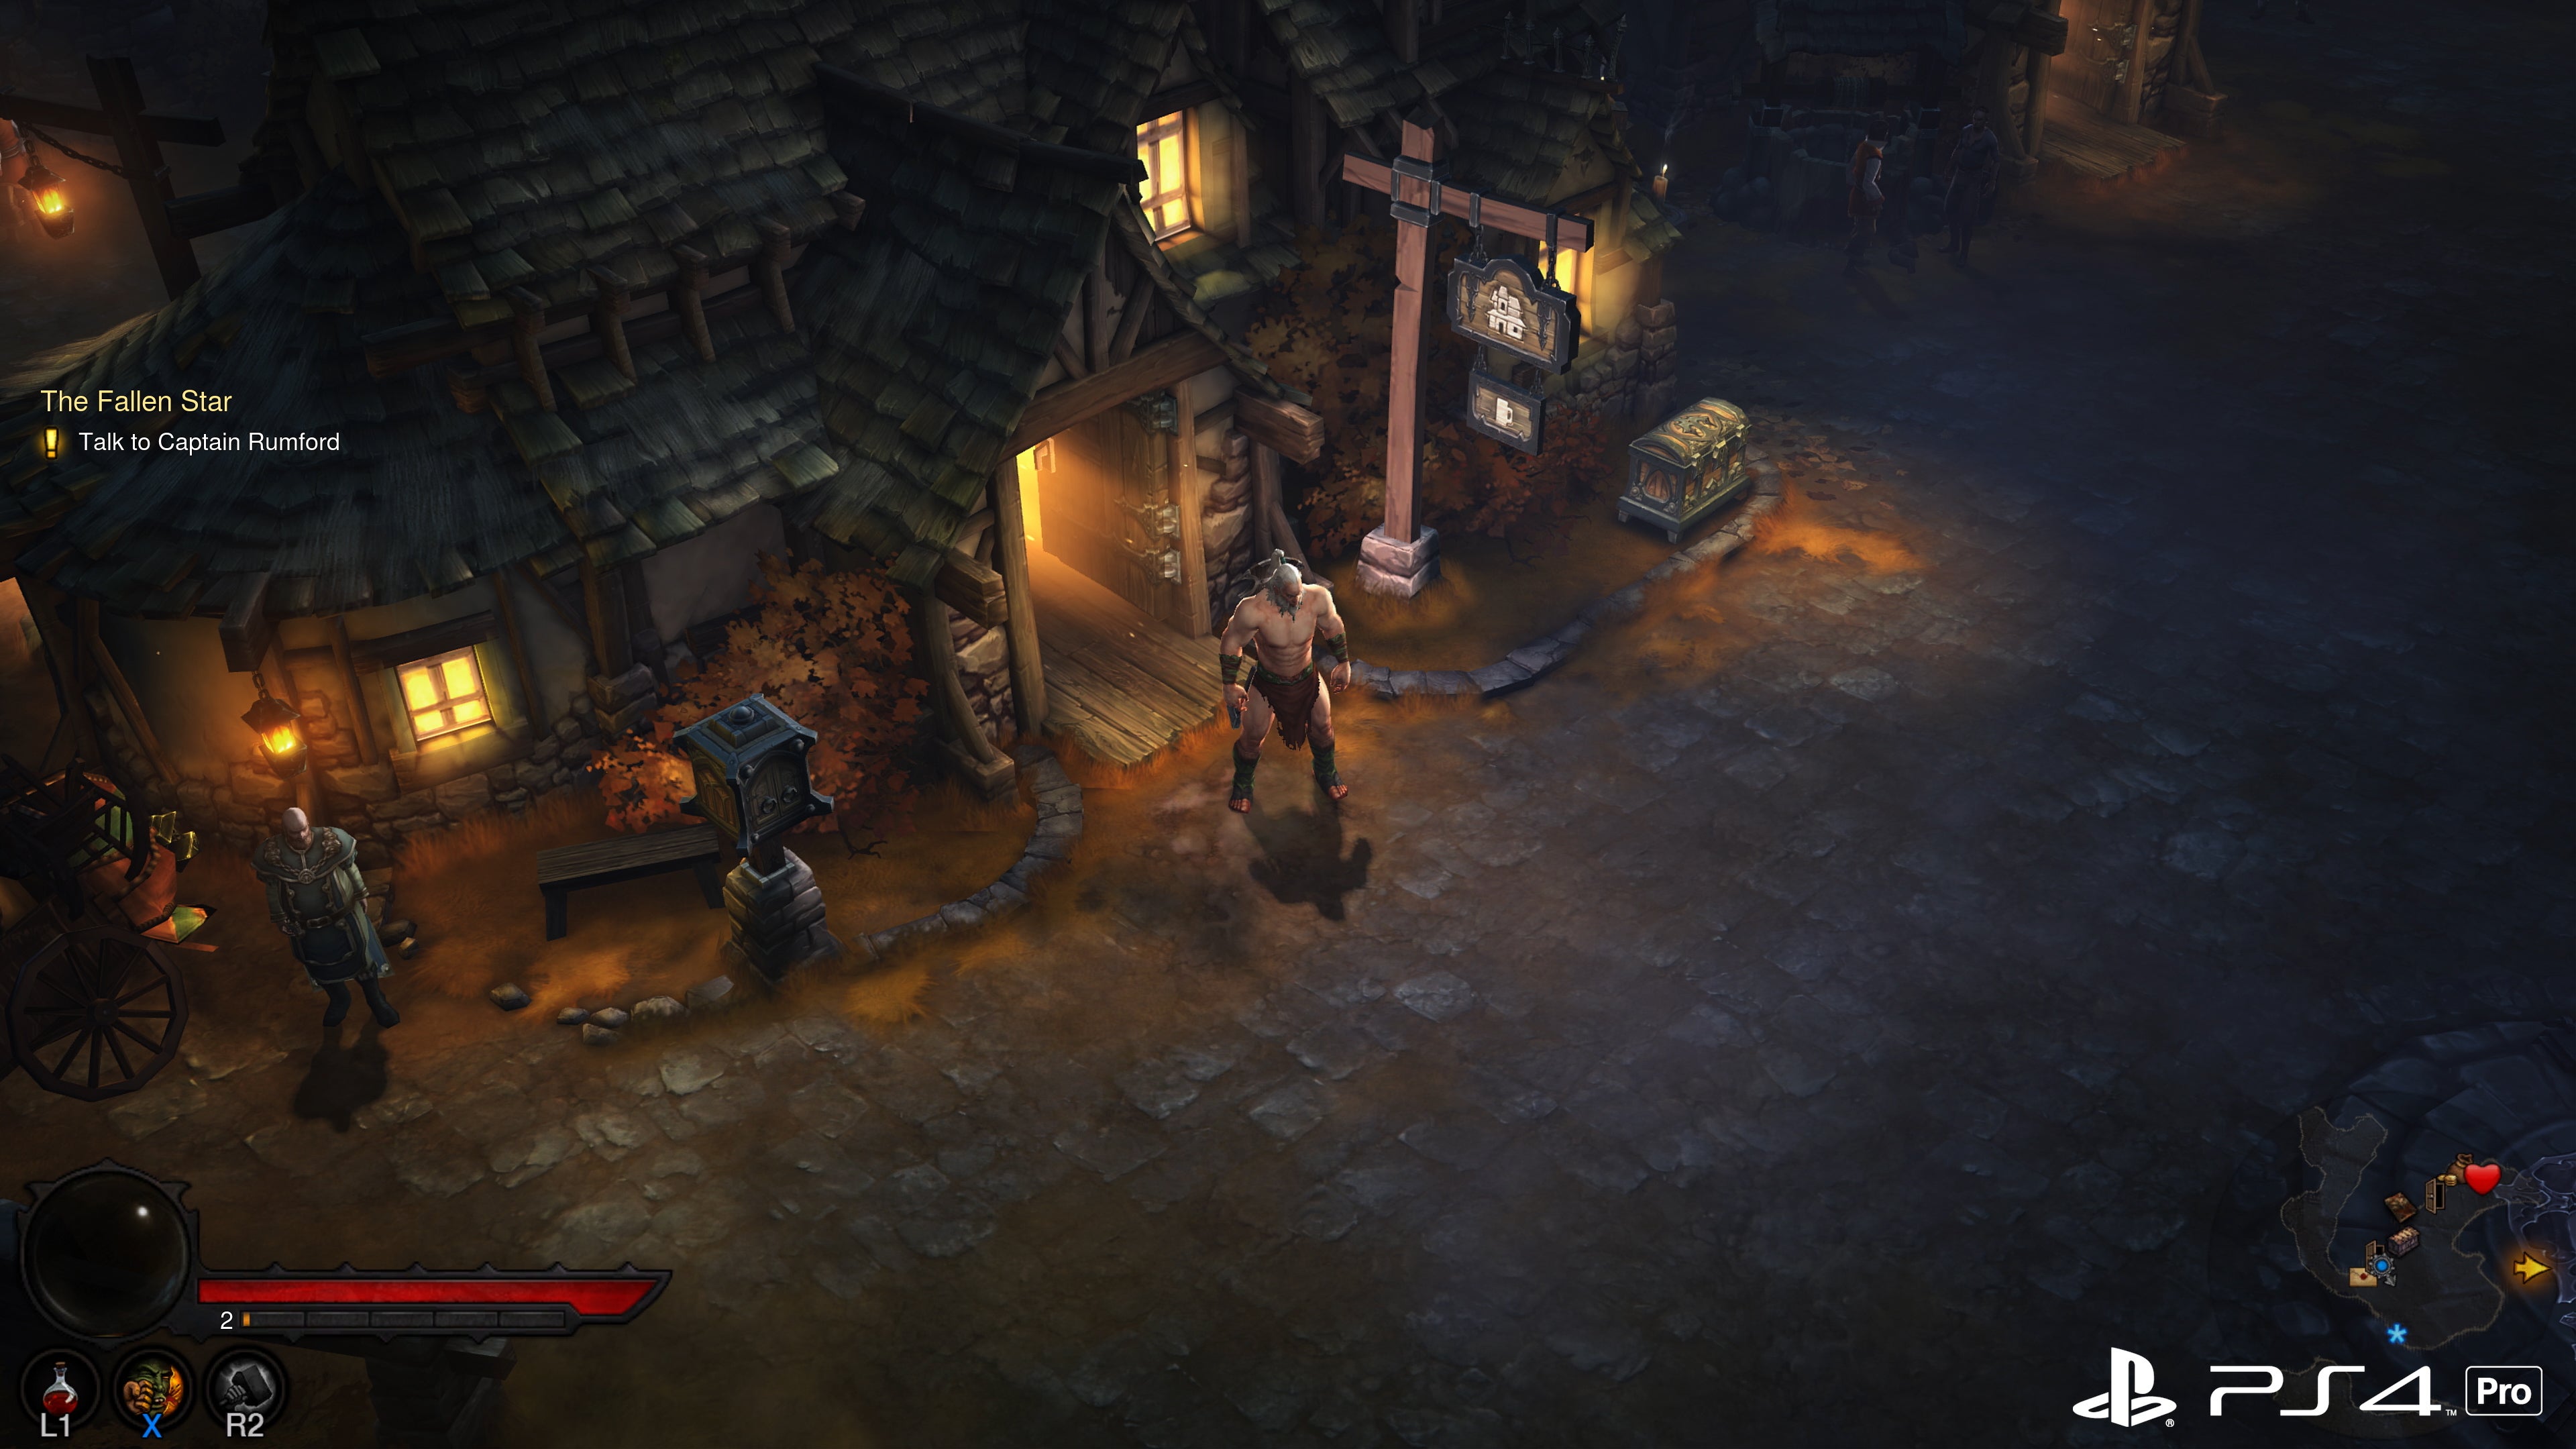 Diablo 3: One vs PS4 Pro dynamic res showdown | Eurogamer.net